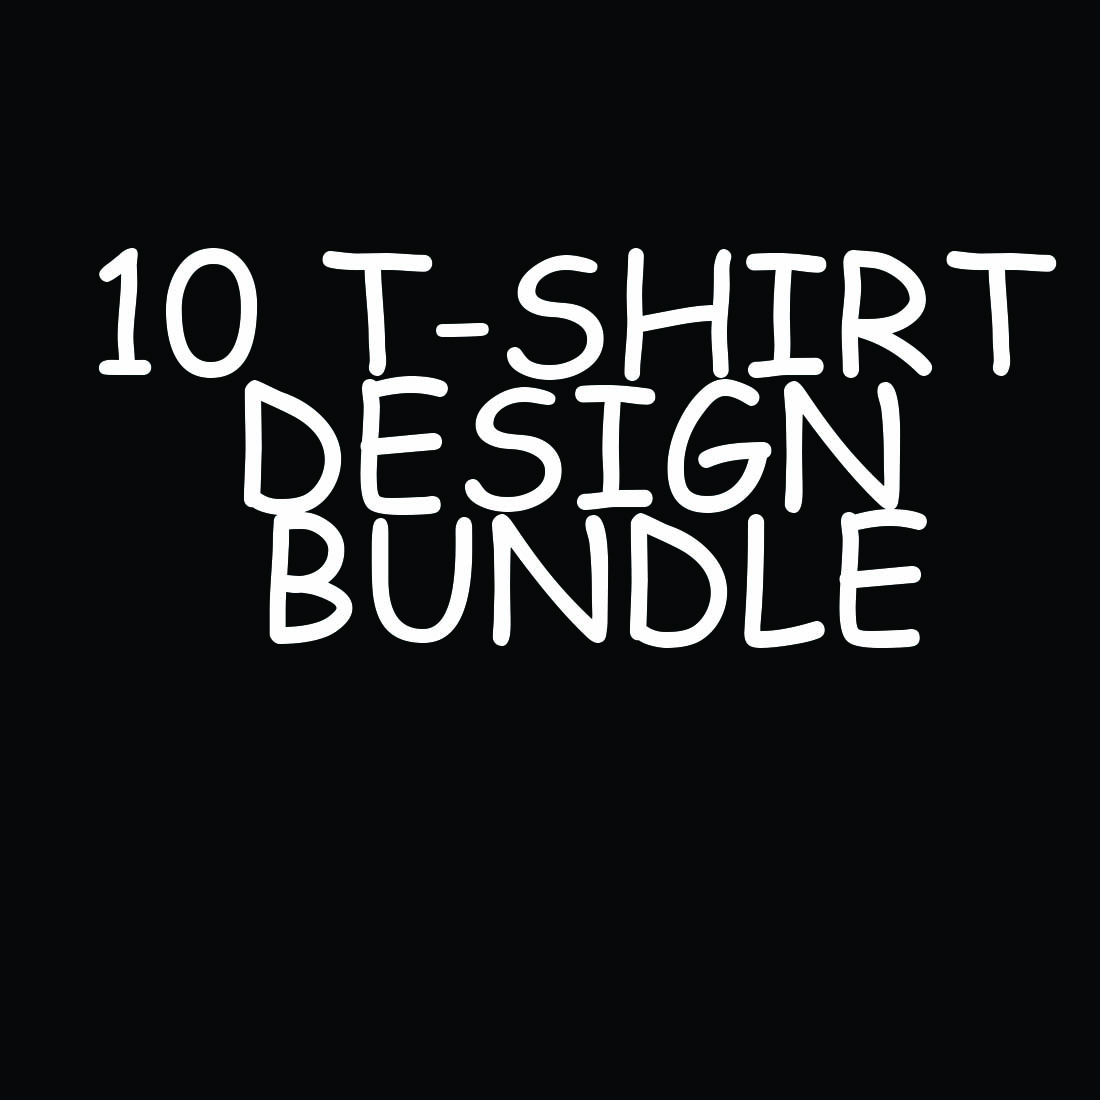 T-shirt Typographic Design Bundle cover image.